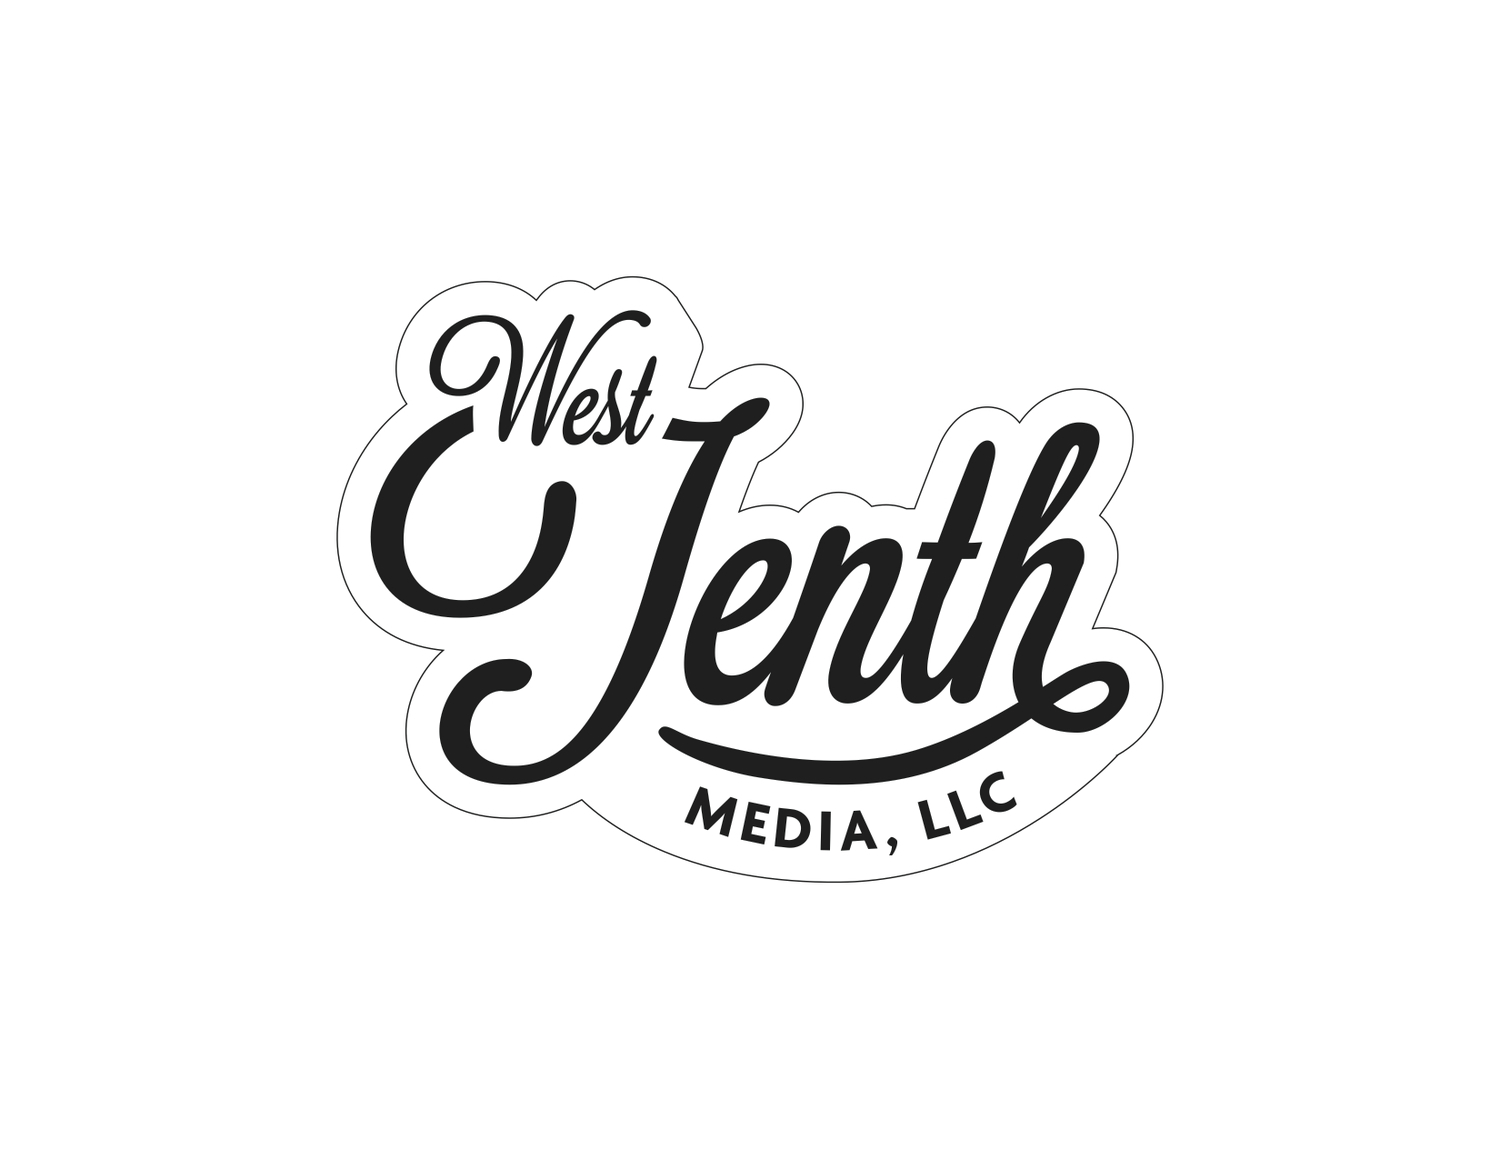 West Tenth Media